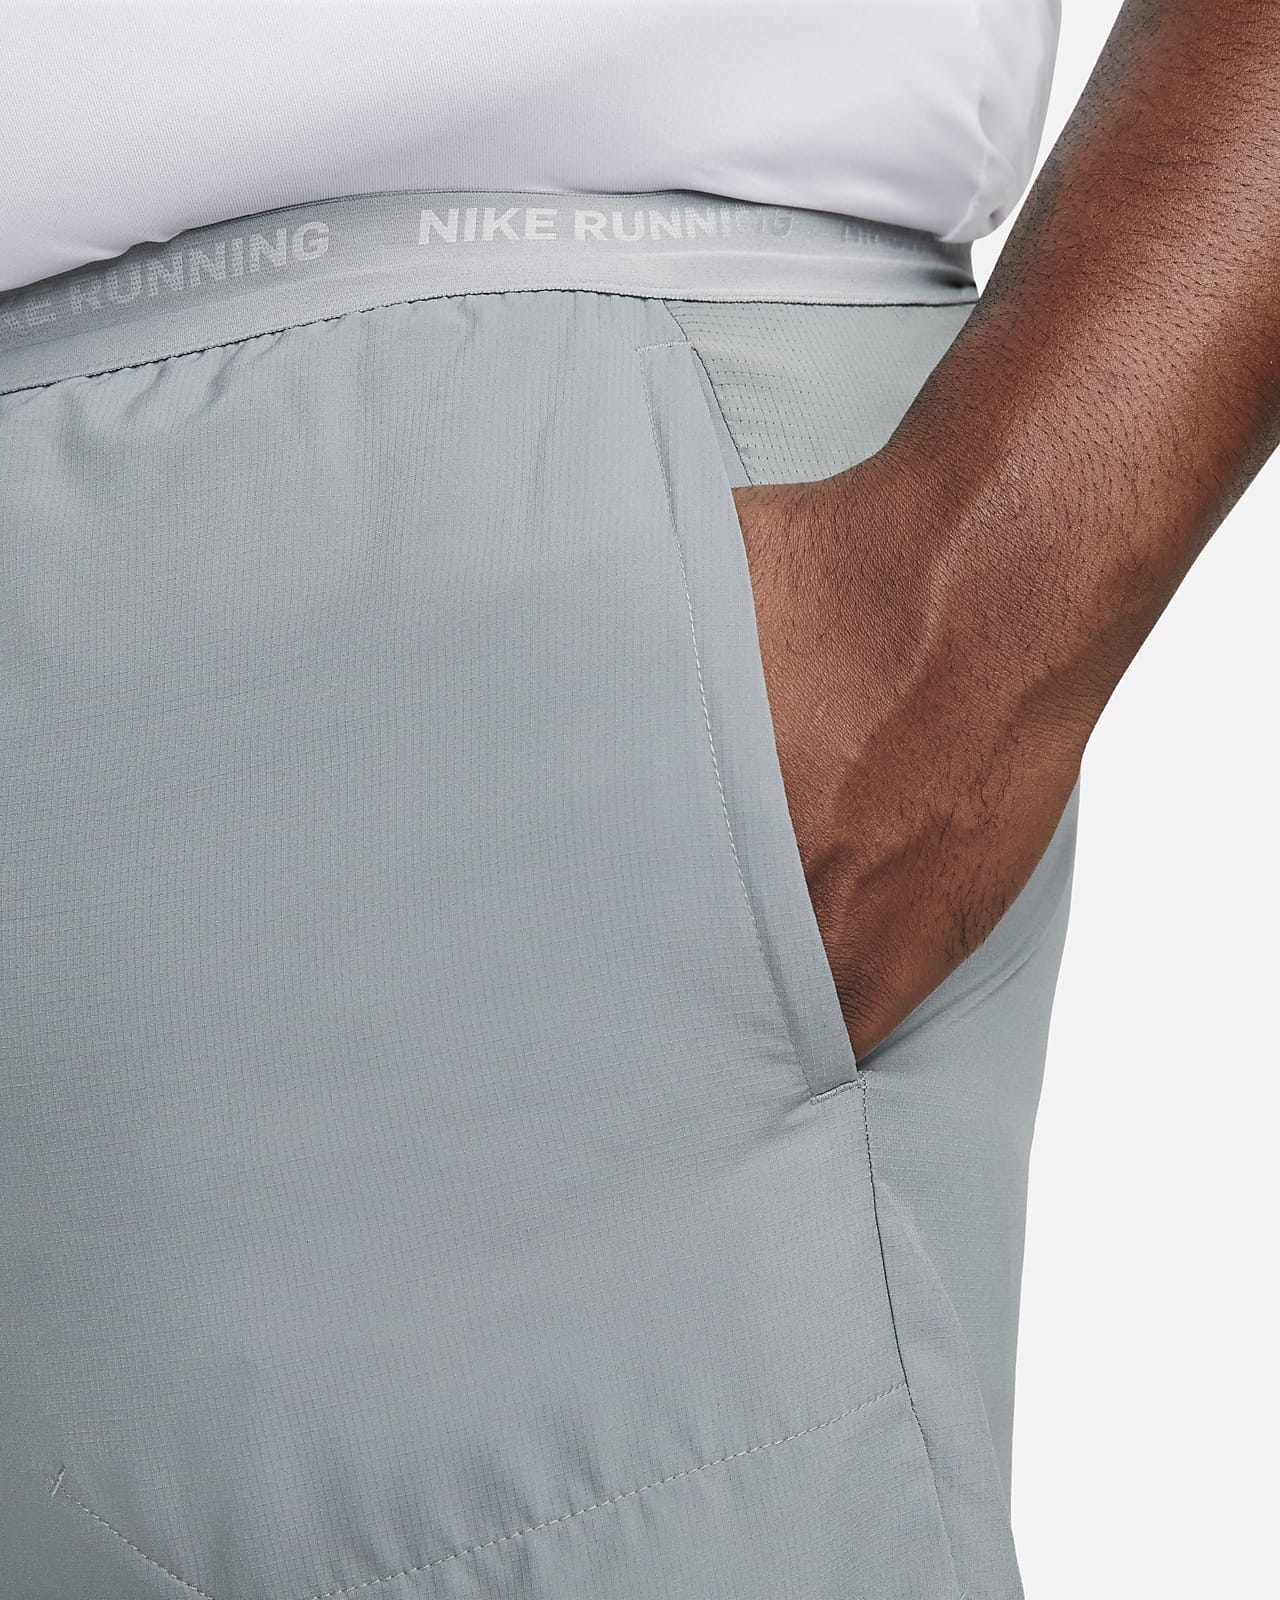 Nike Men's Core Dri-FIT Stride 7 Unlined Short